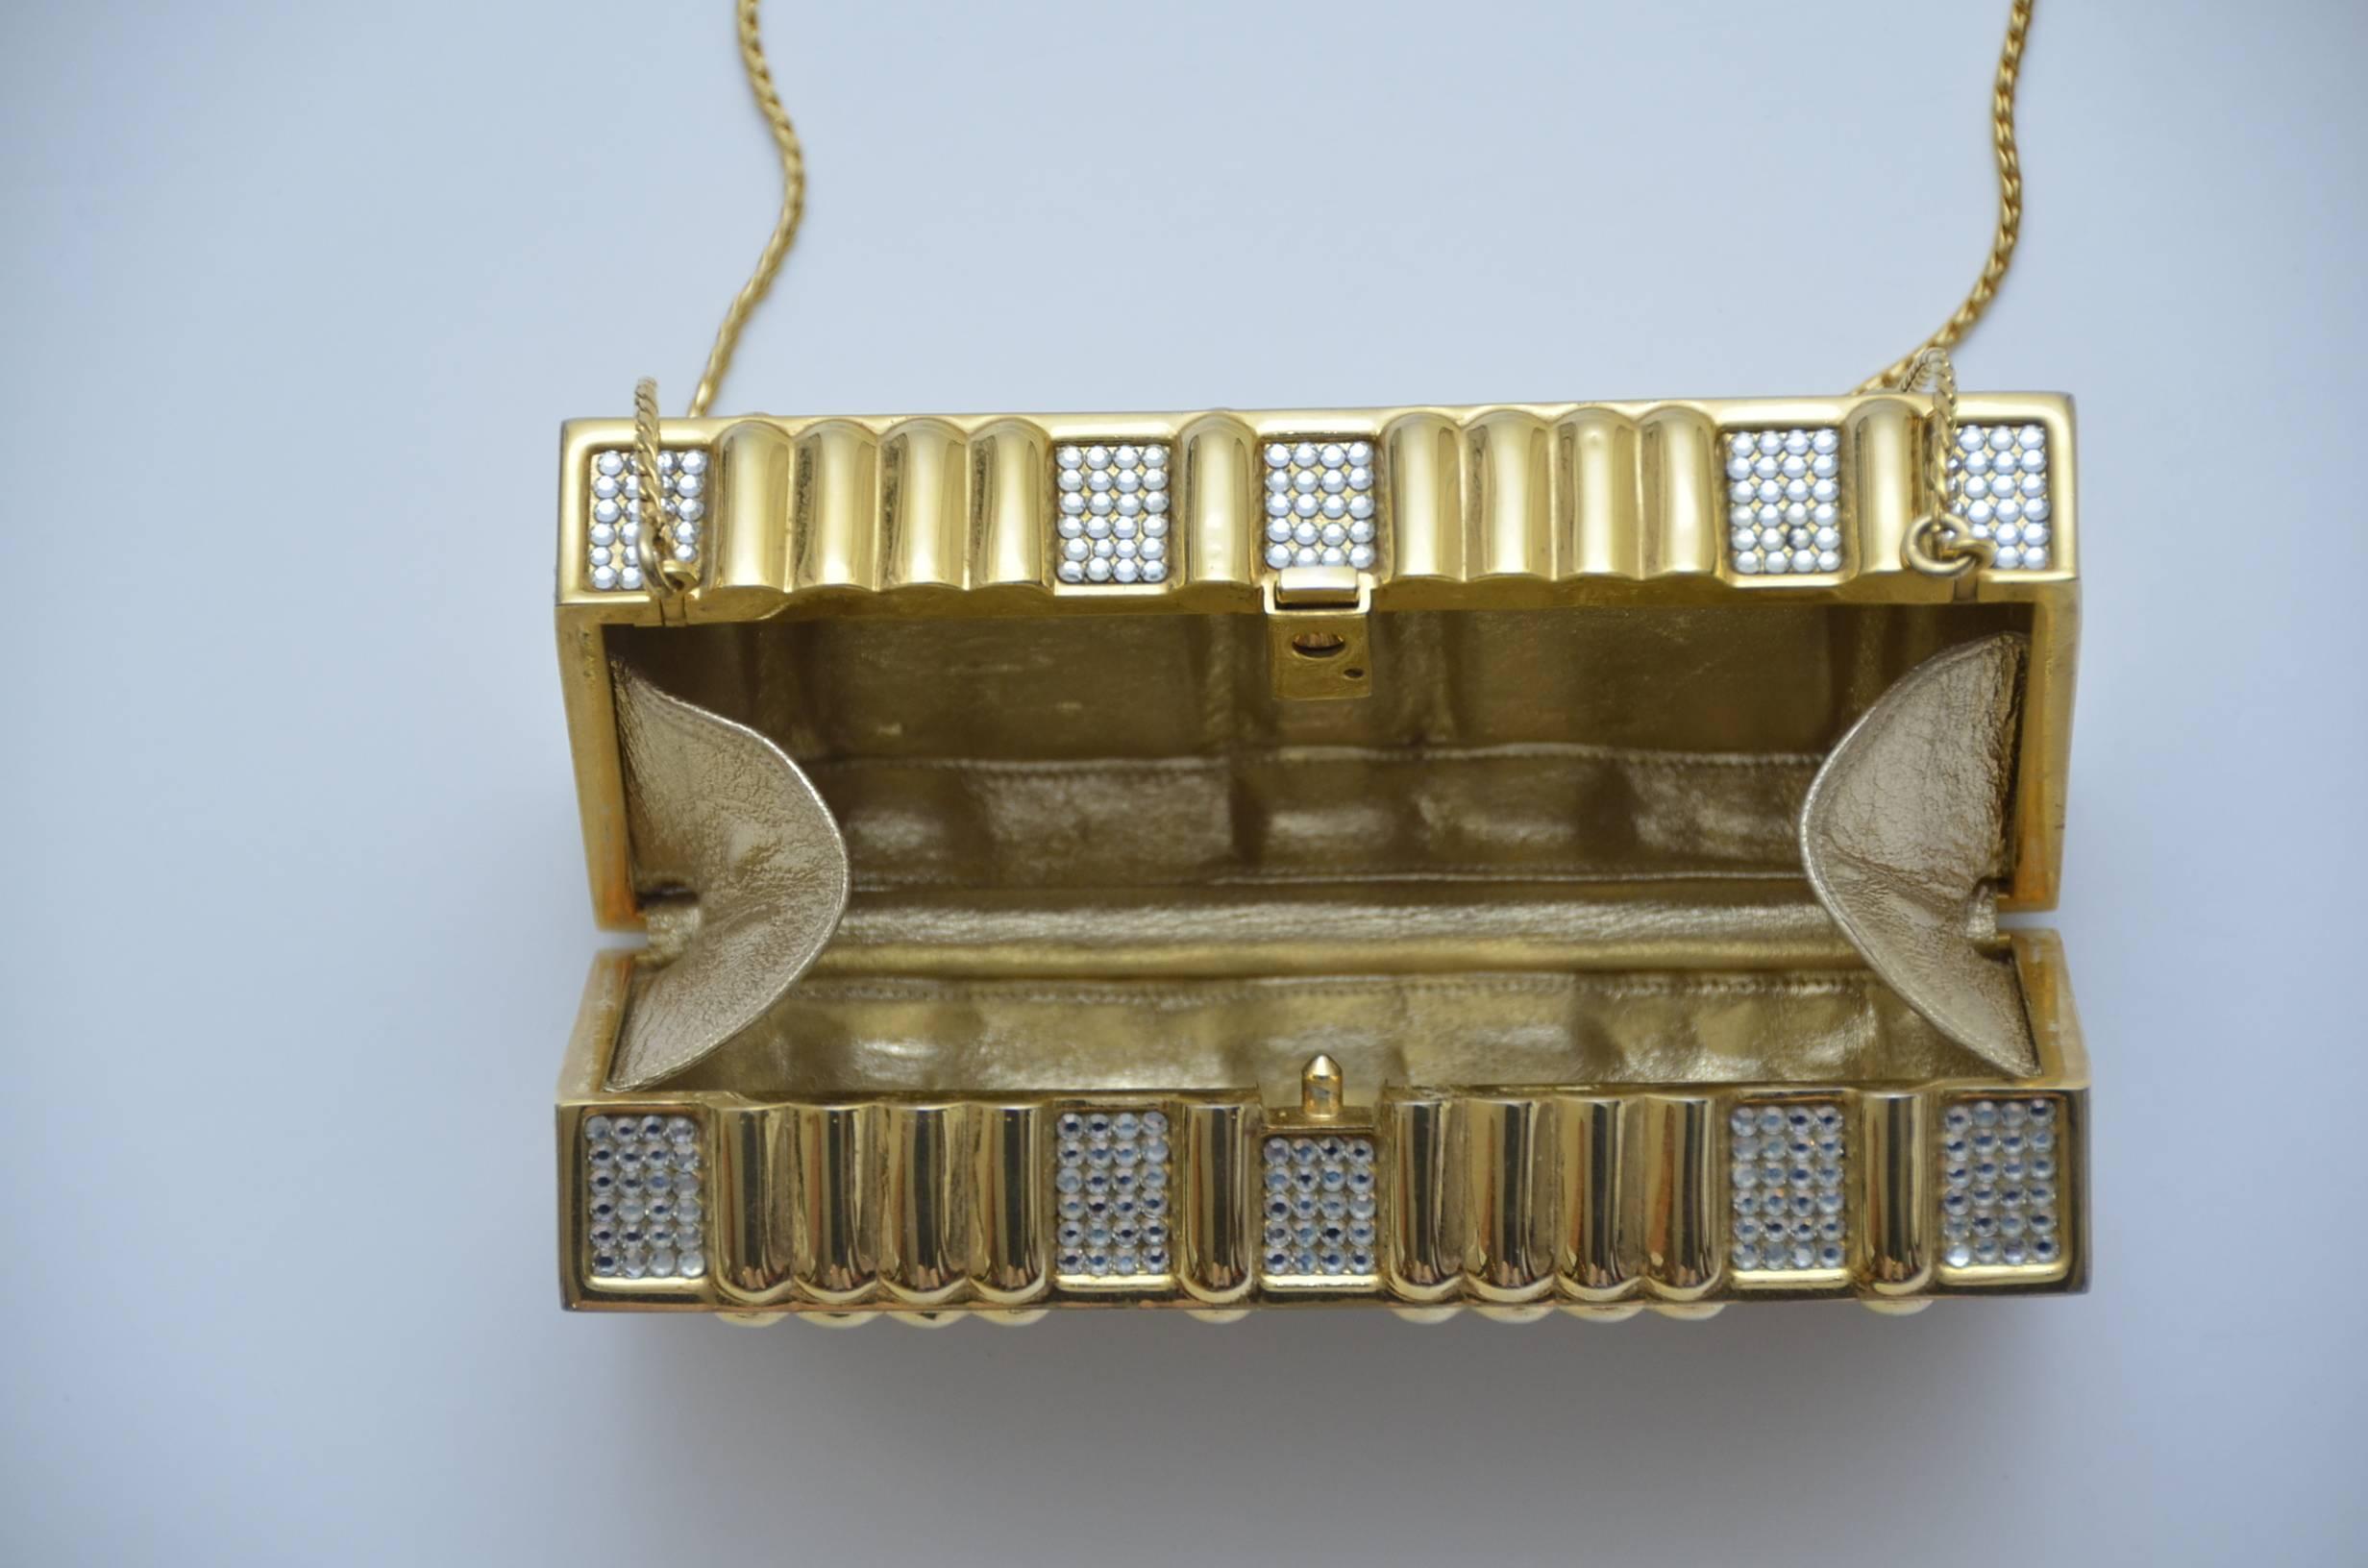 Vintage Judith Leiber evening mini trunk handbag/clutch.
Gold tone hardware.
Great  vintage condition.
Approx. measure:L 5.75